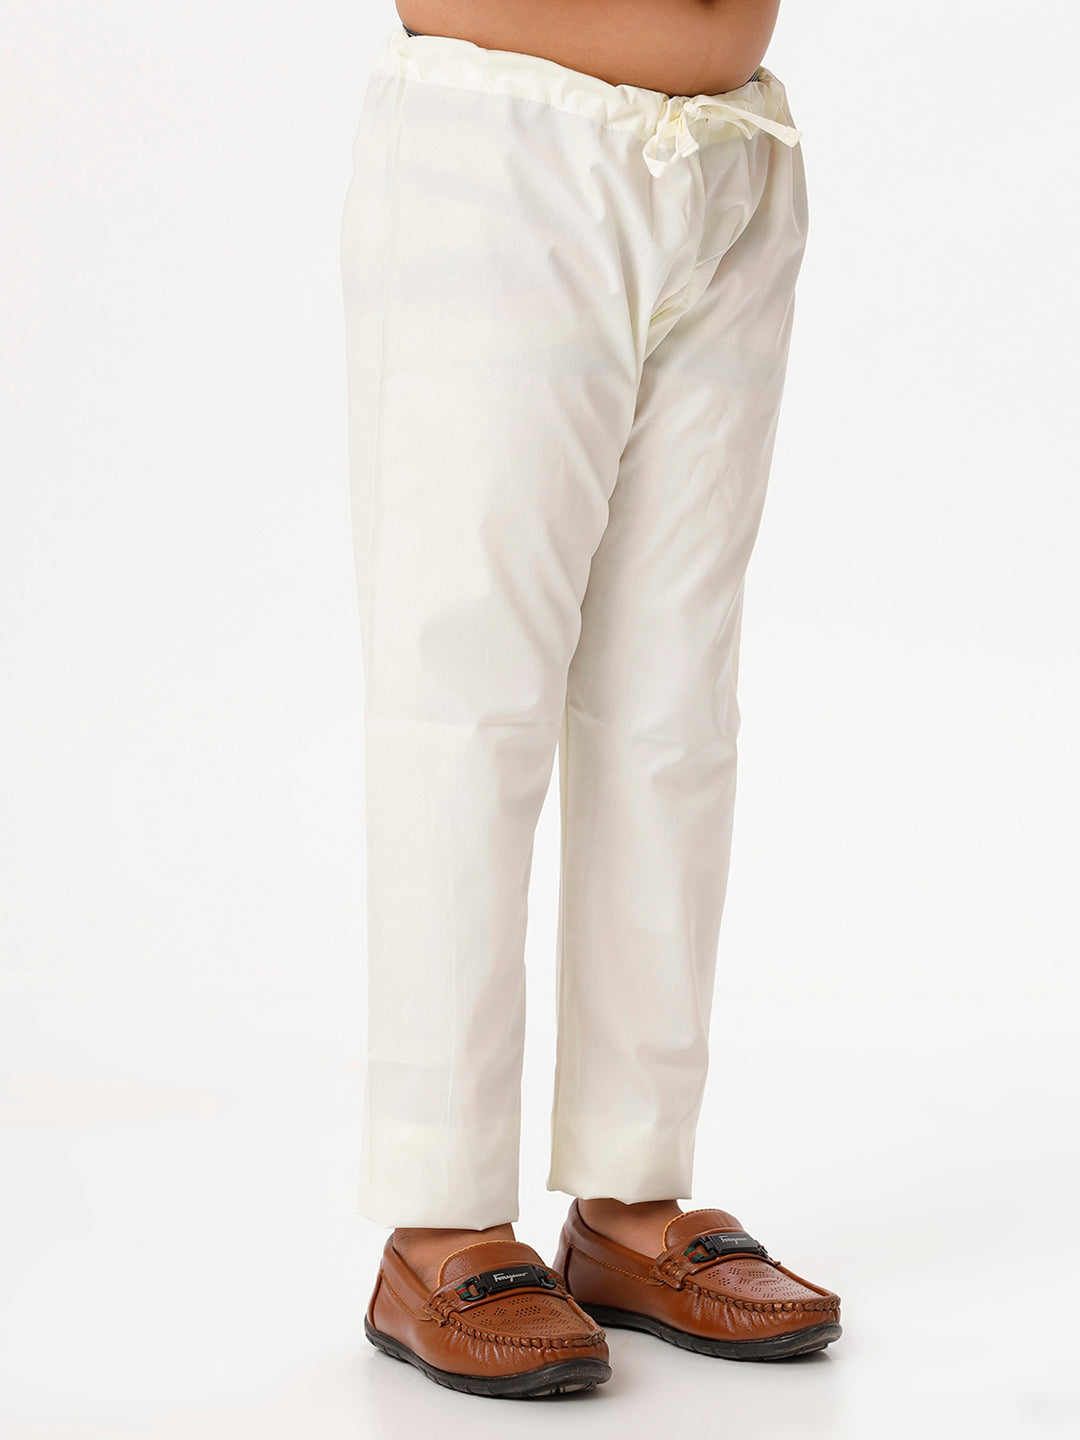 Boys Cotton Embellished Neckline Full Sleeves Navy Kurta with Pyjama Pant Combo EMD6-Side alternative view